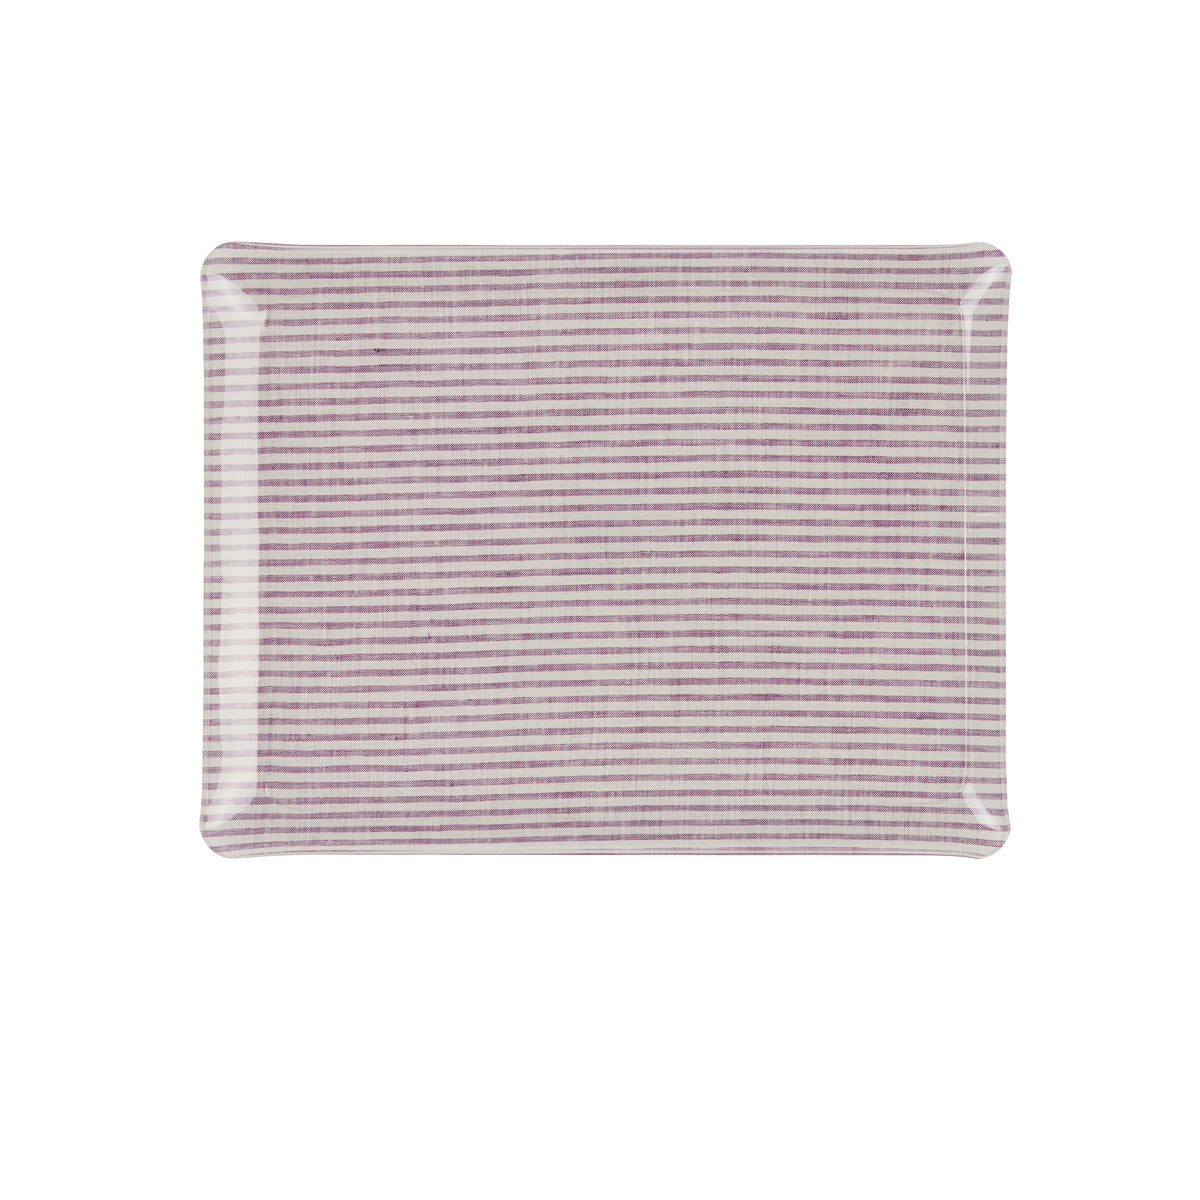 Nina Campbell Fabric Tray Medium - Stripe Amethyst and White